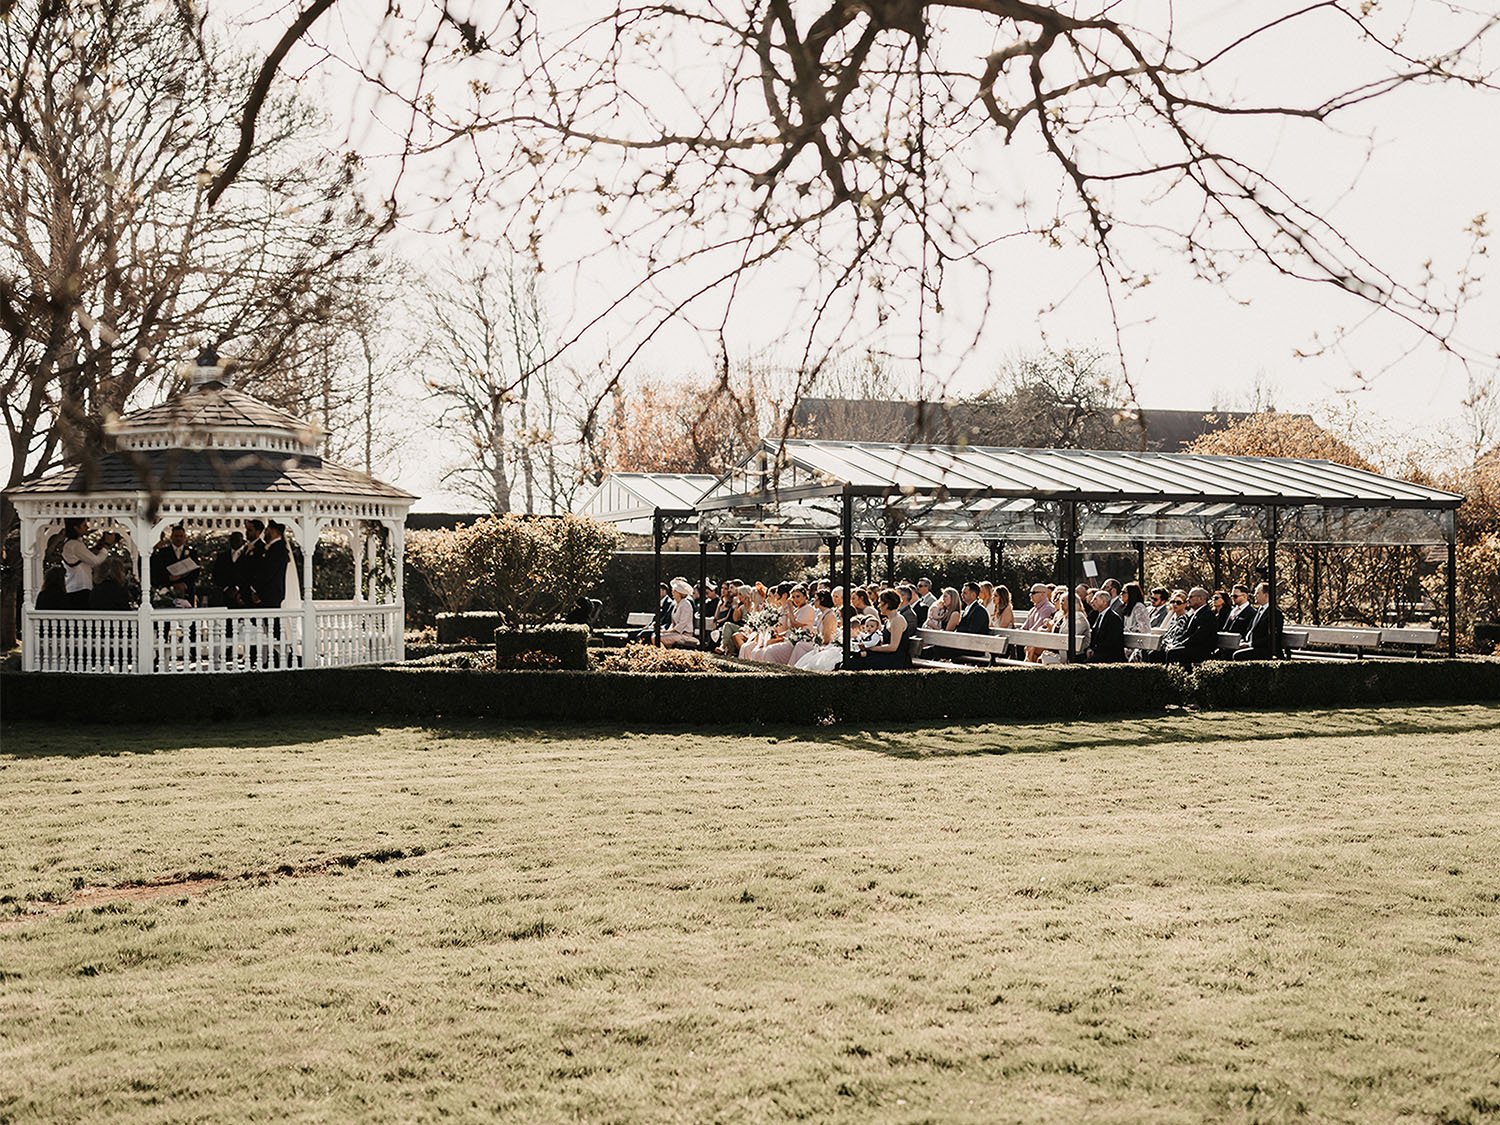 The Old Kent Barn Wedding Venue Garden Ceremony Area (Outdoors)